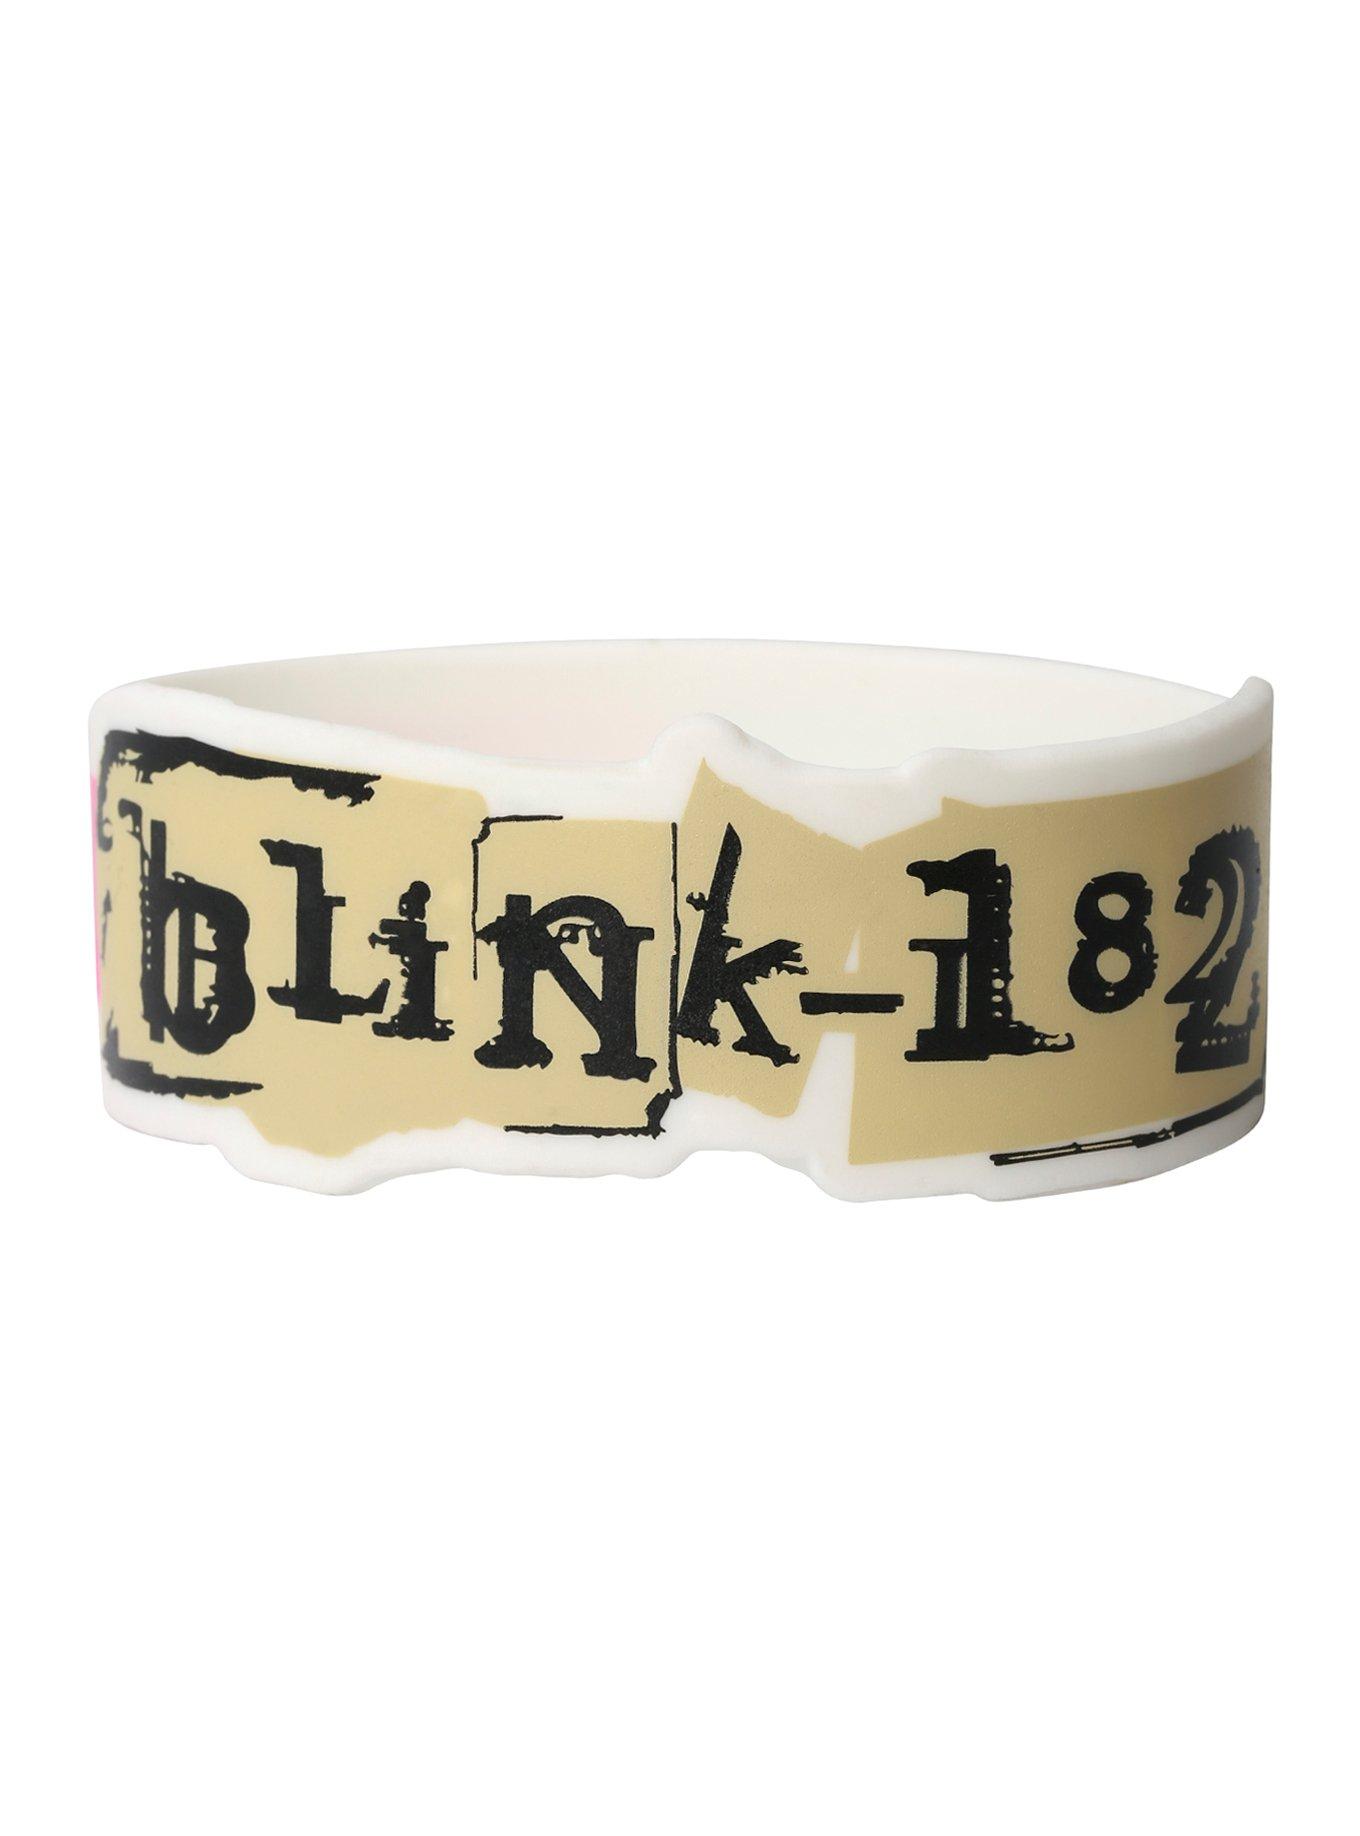 Blink-182 Pink Turquoise Die-Cut Rubber Bracelet, , hi-res